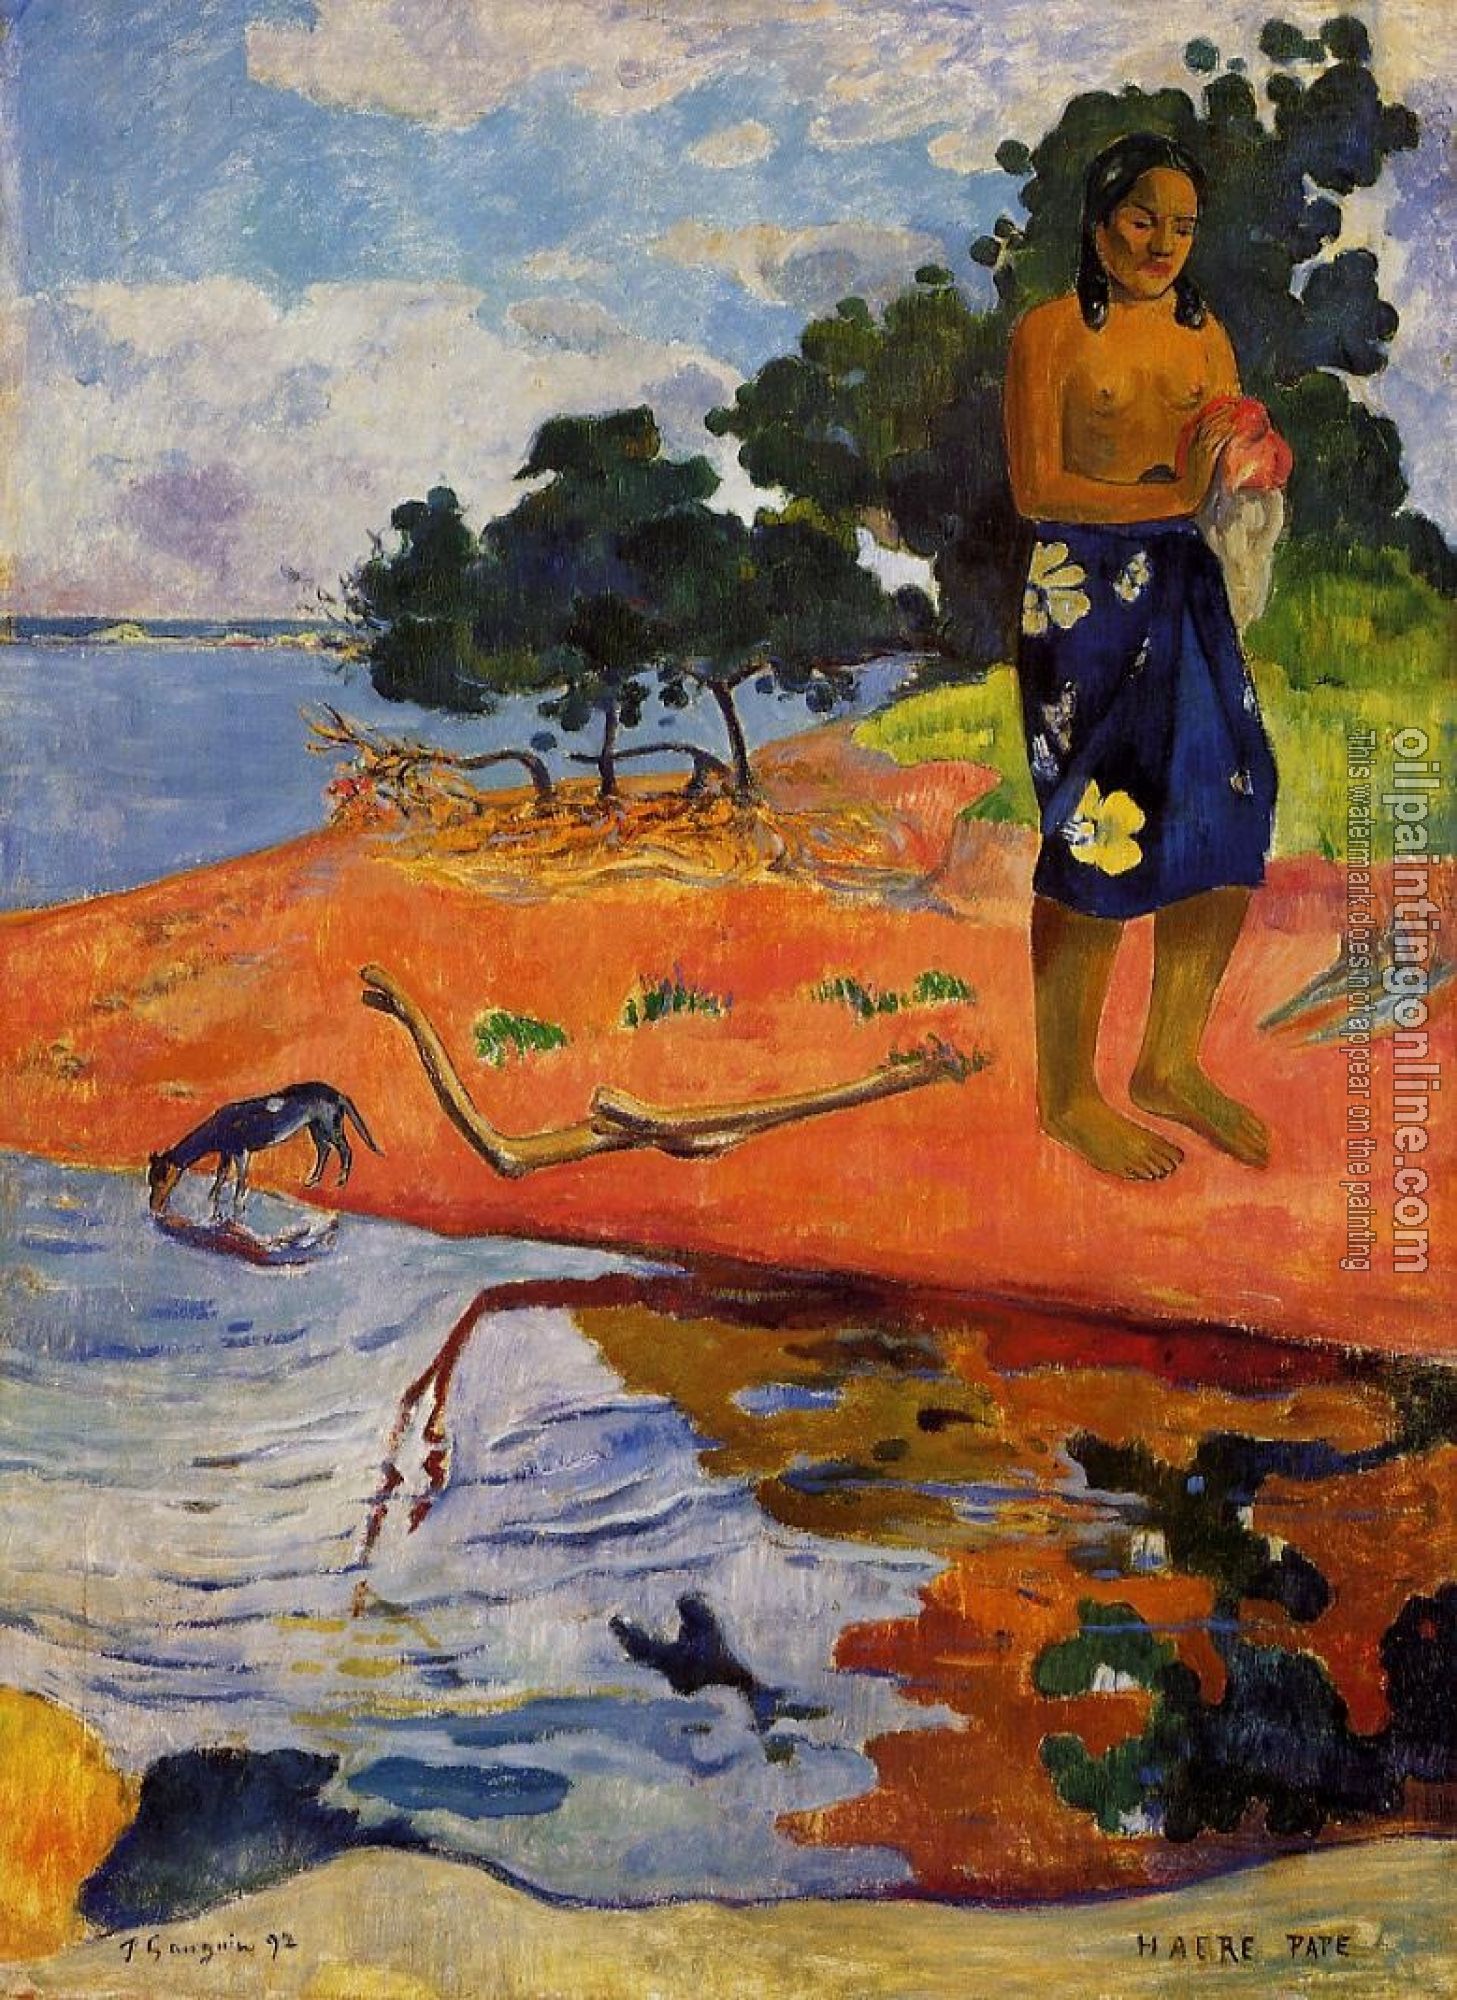 Gauguin, Paul - Haere Pape